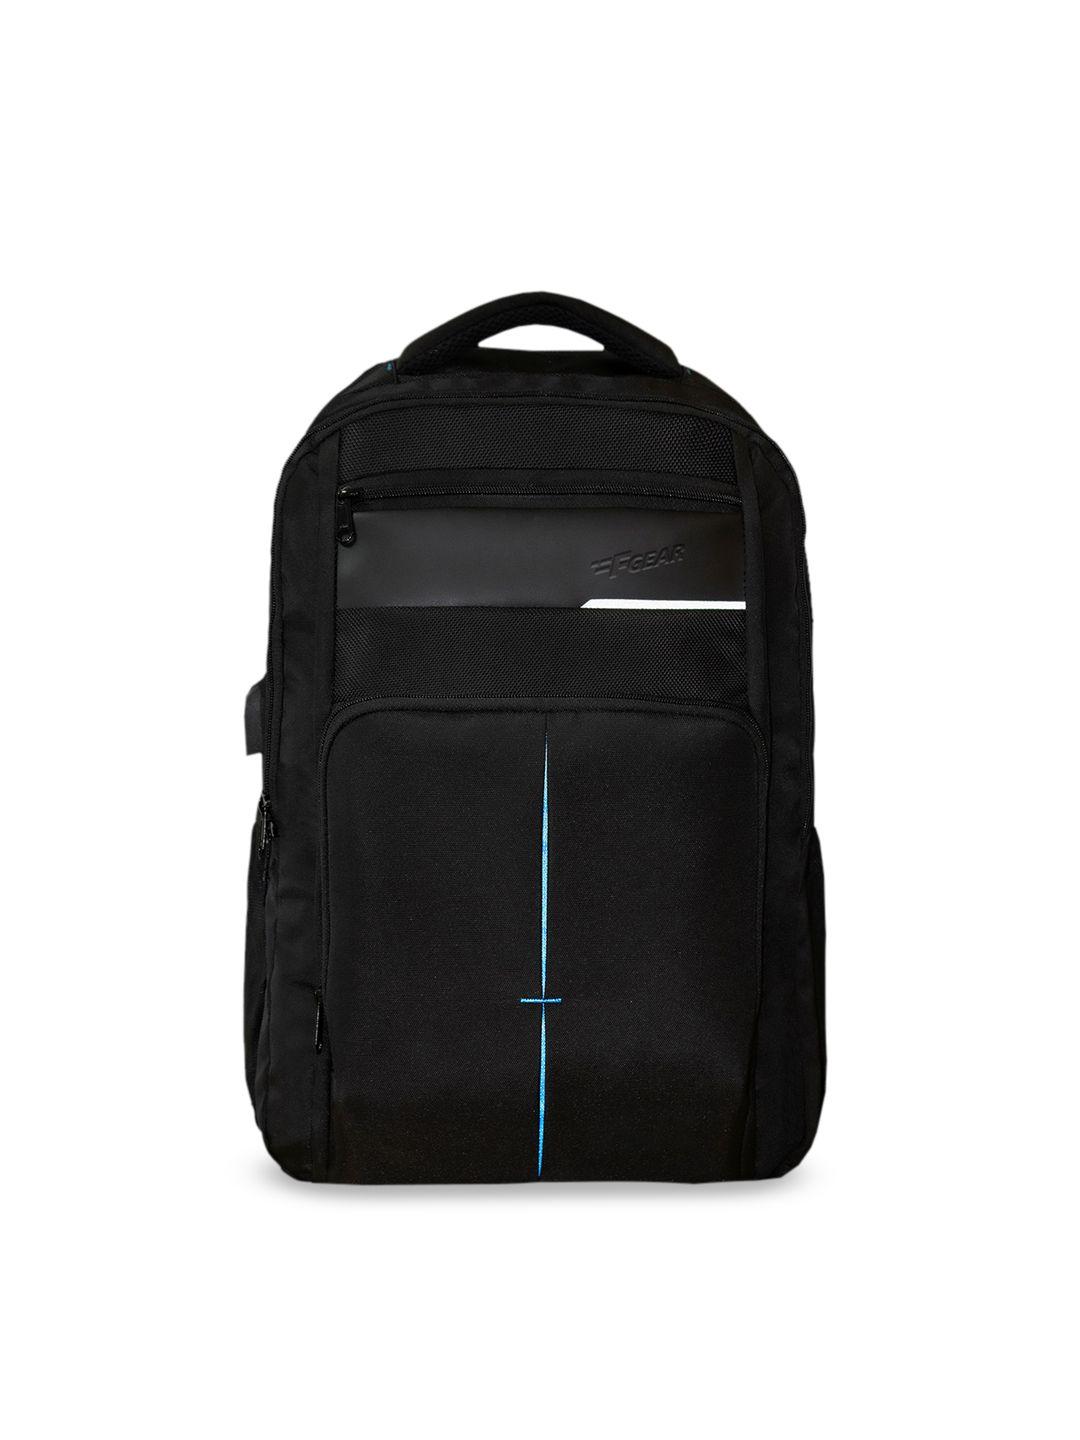 f gear unisex black & blue backpack